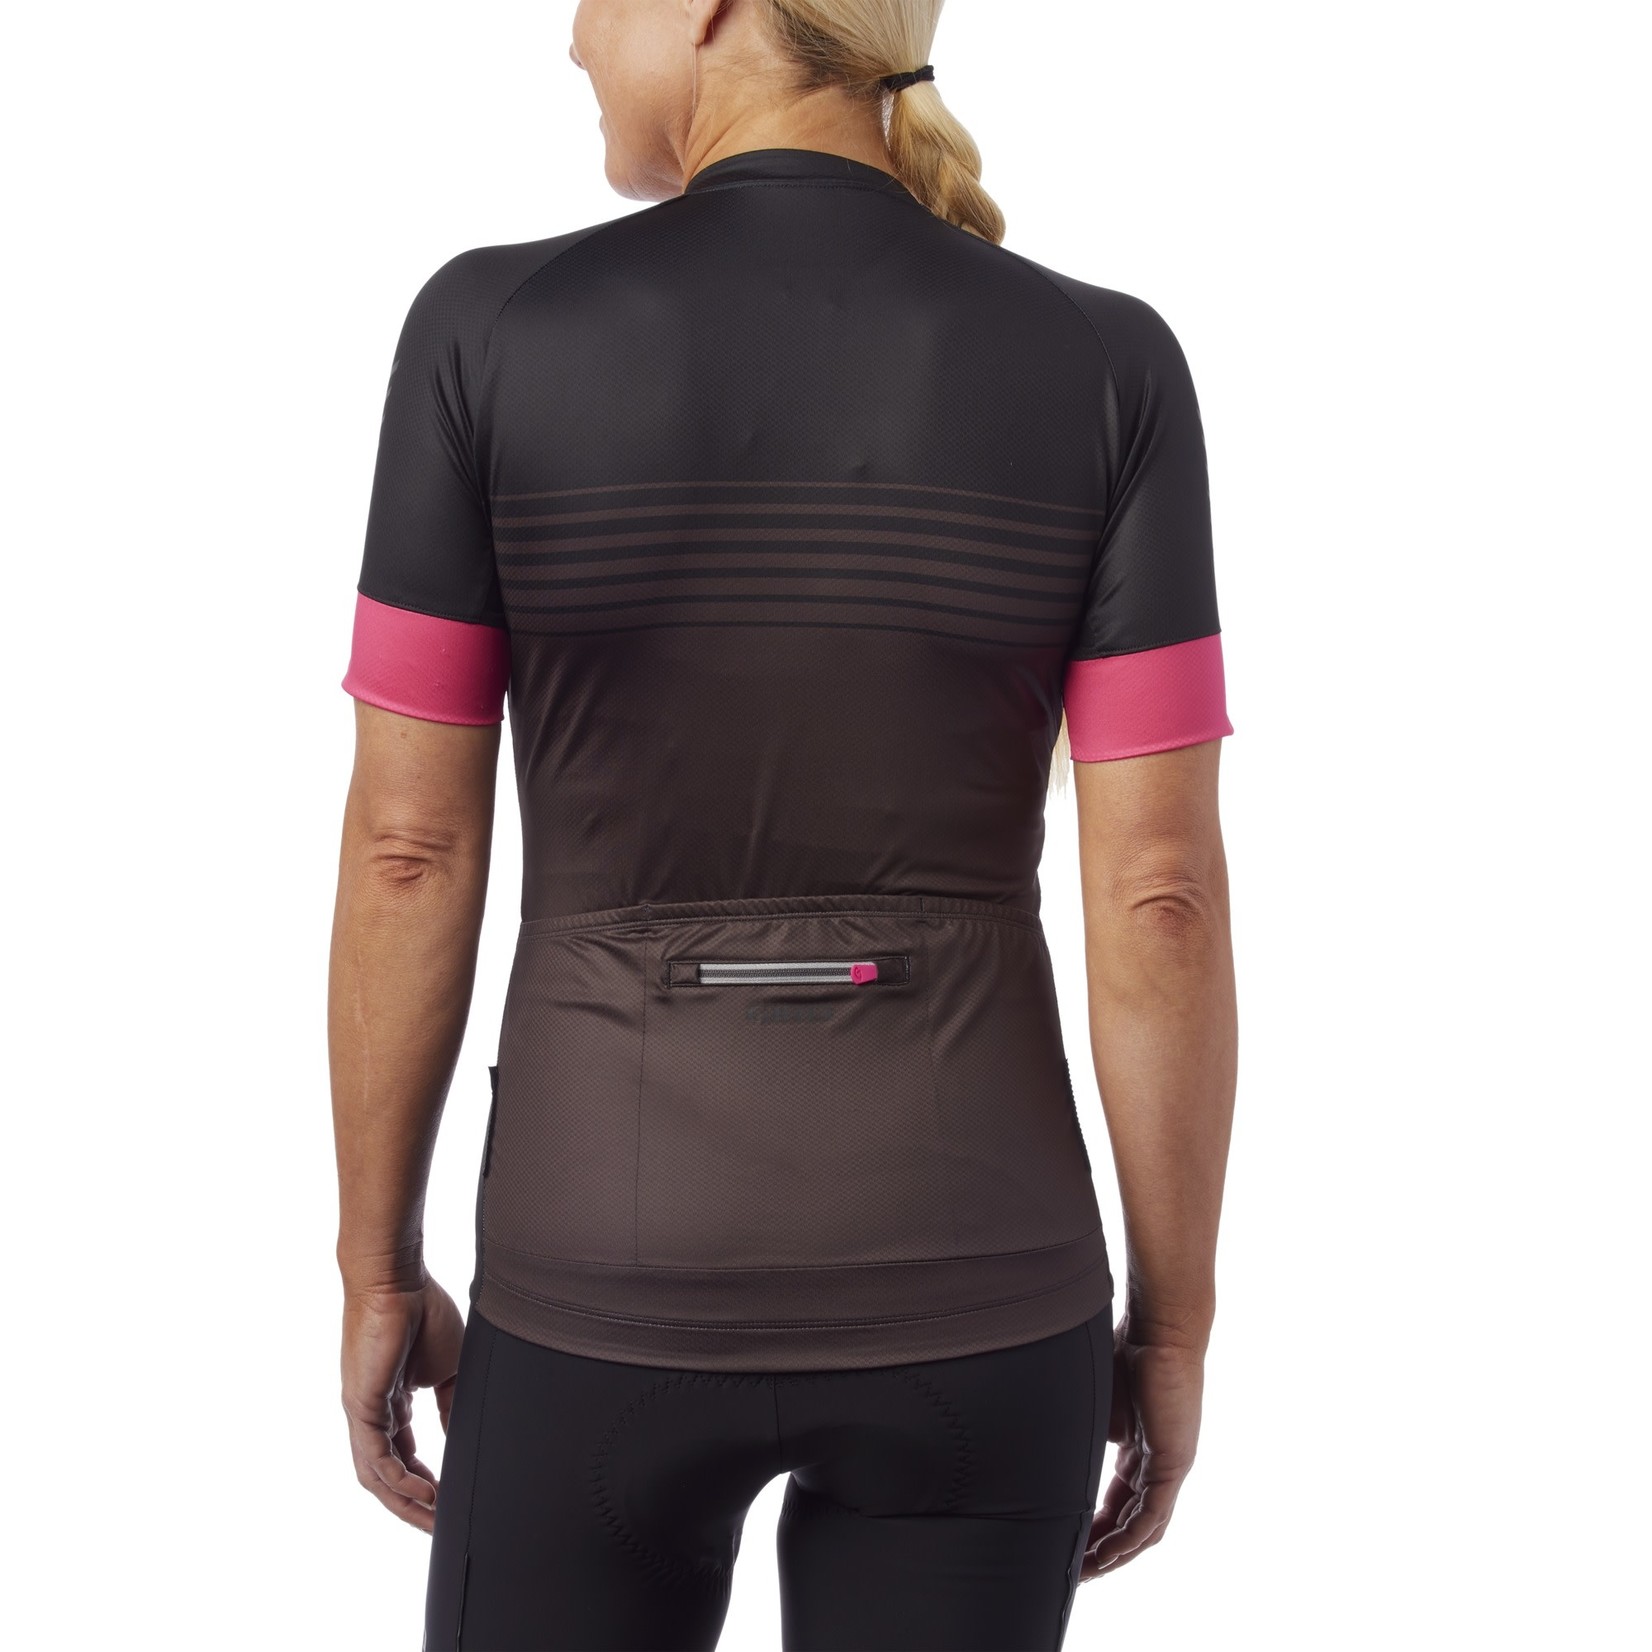 Giro Chrono Expert Womens Cycling Jersey Pink Black Stripe